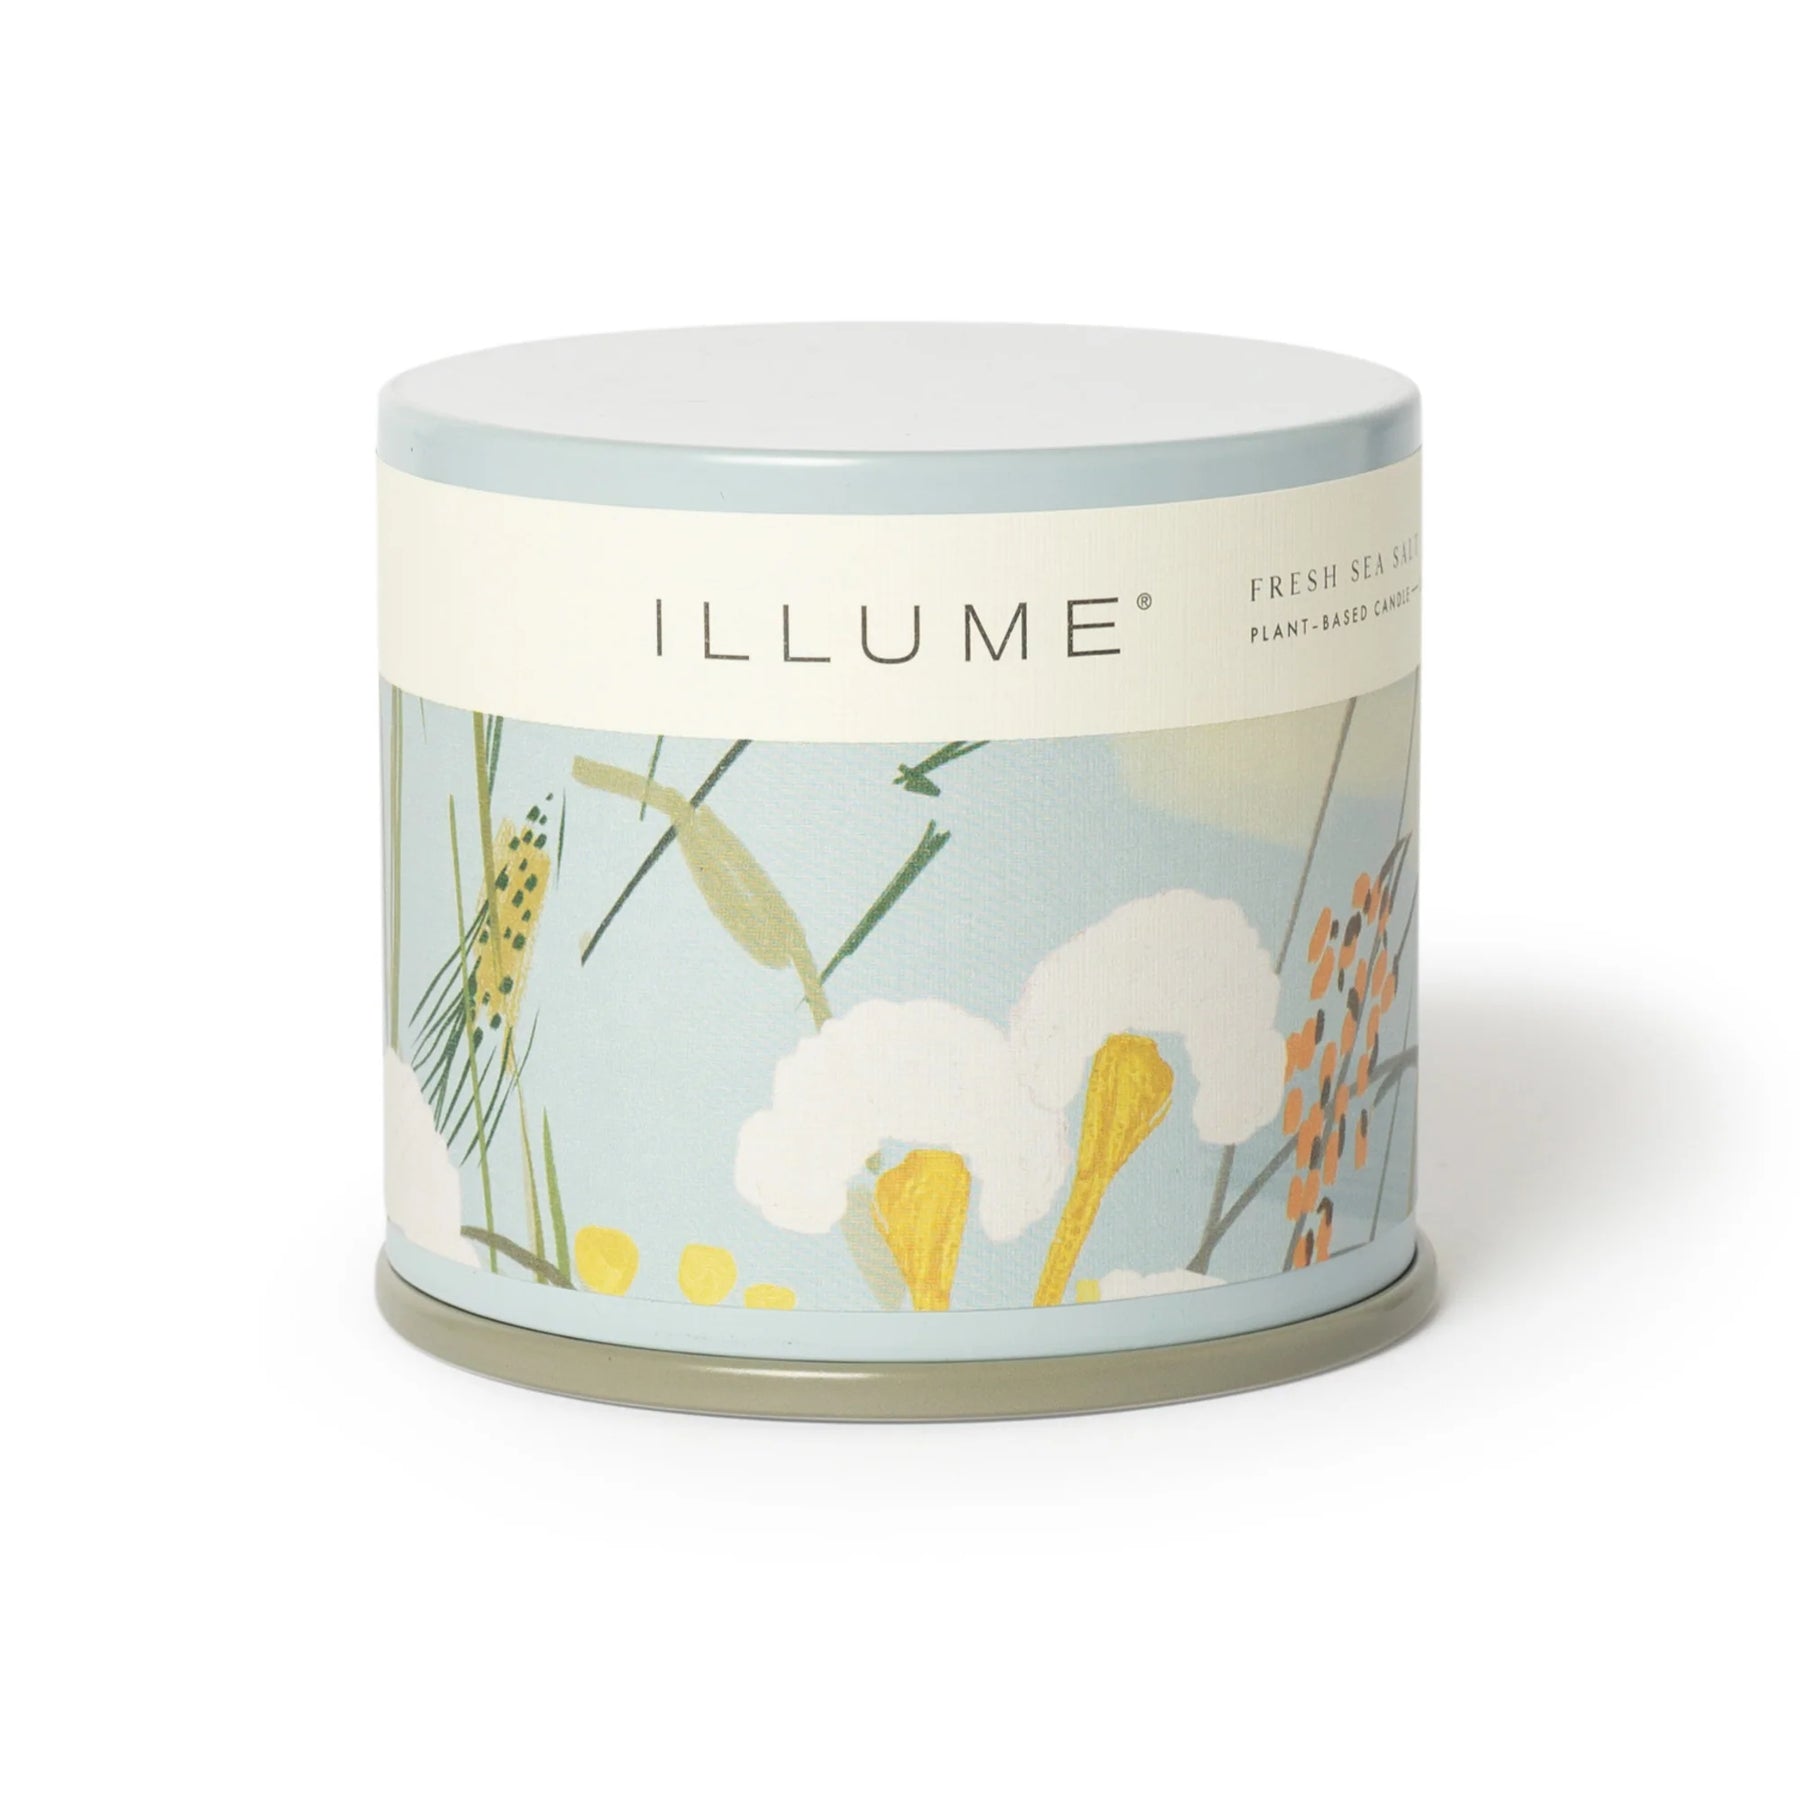 ILLUME® Beautifully Done Collection Fresh Sea Salt Diffuser Refill